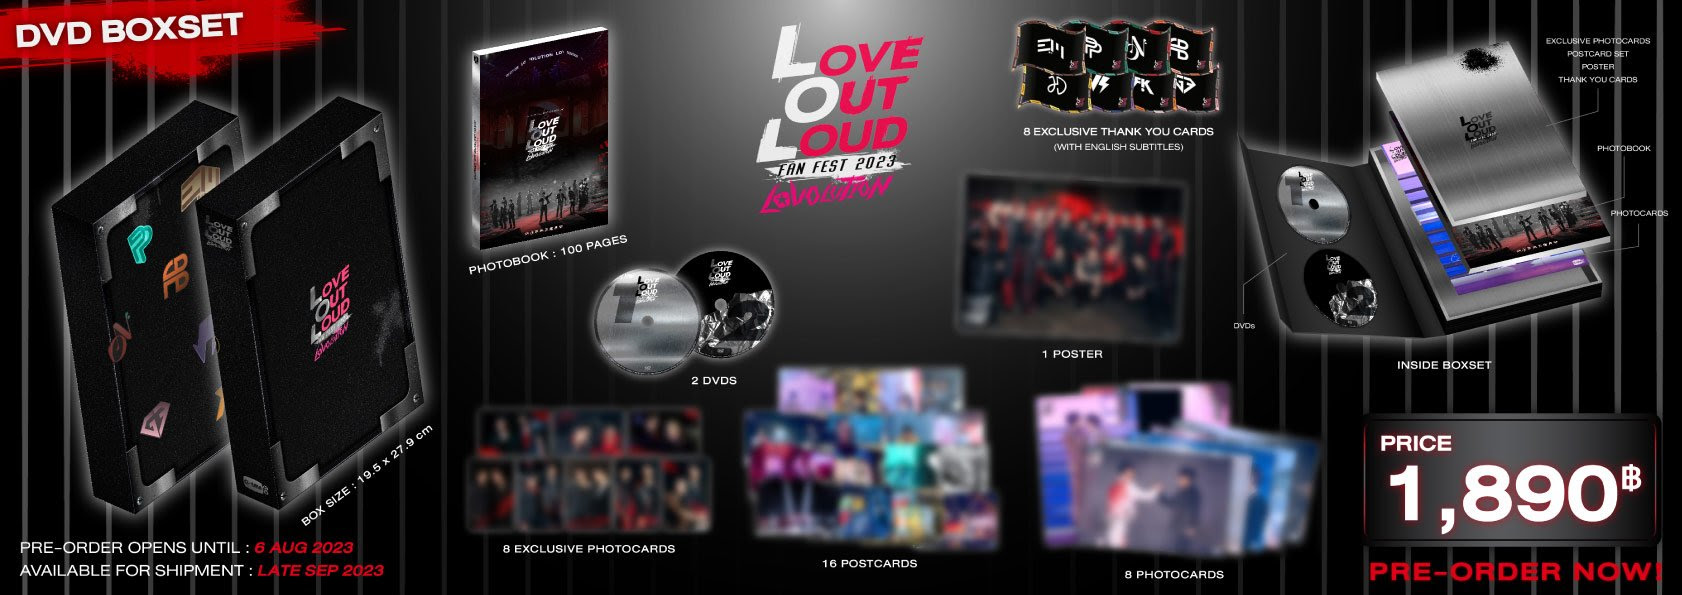 DVD BOXSET LOVE OUT LOUD FAN FEST 2023: LOVOLUTION 《Eパケット代込